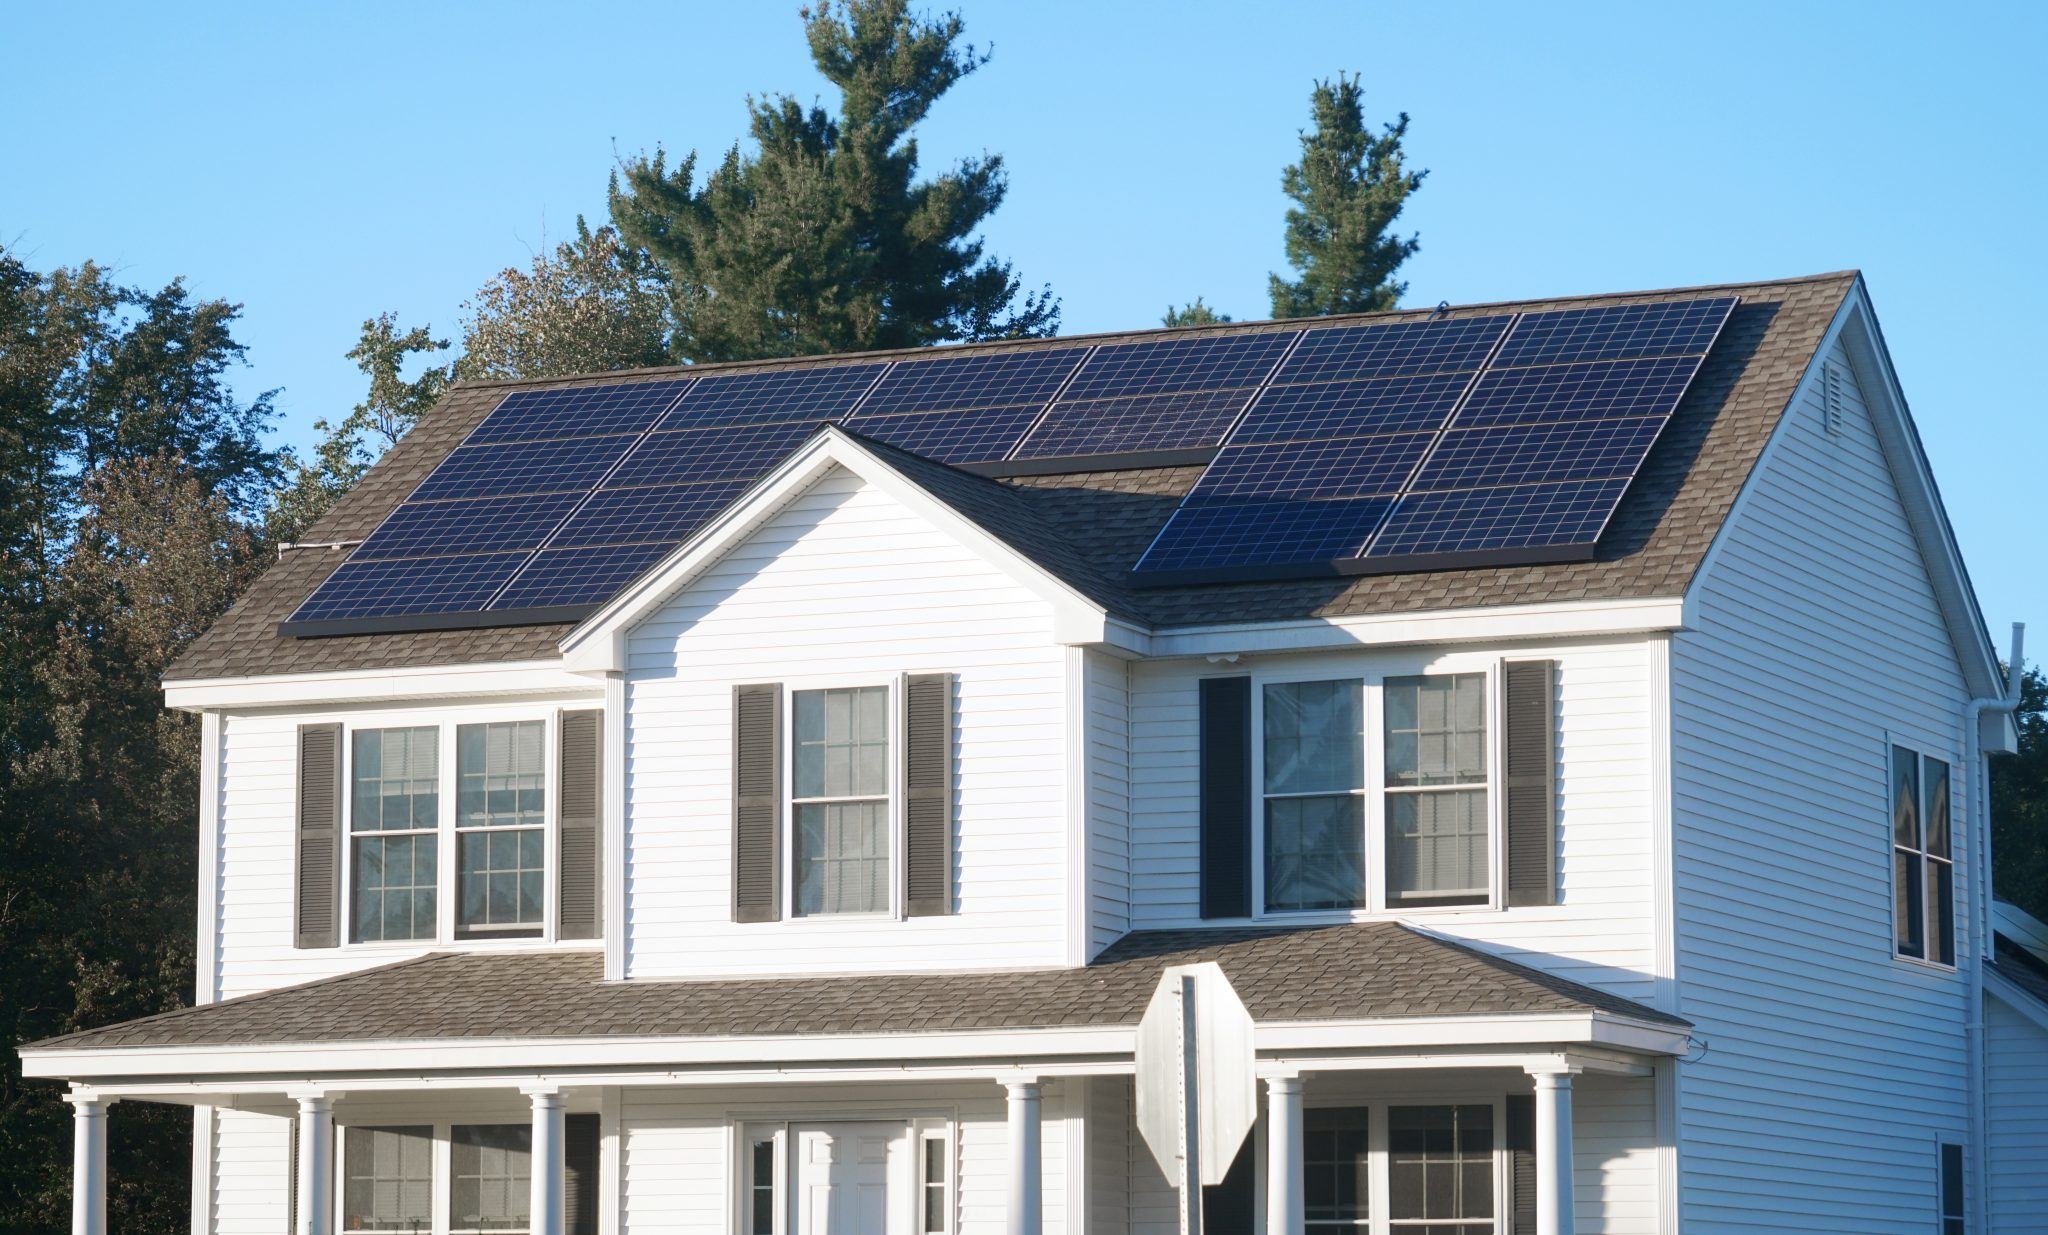 How Many Solar Panels Would I Need to Power My House?